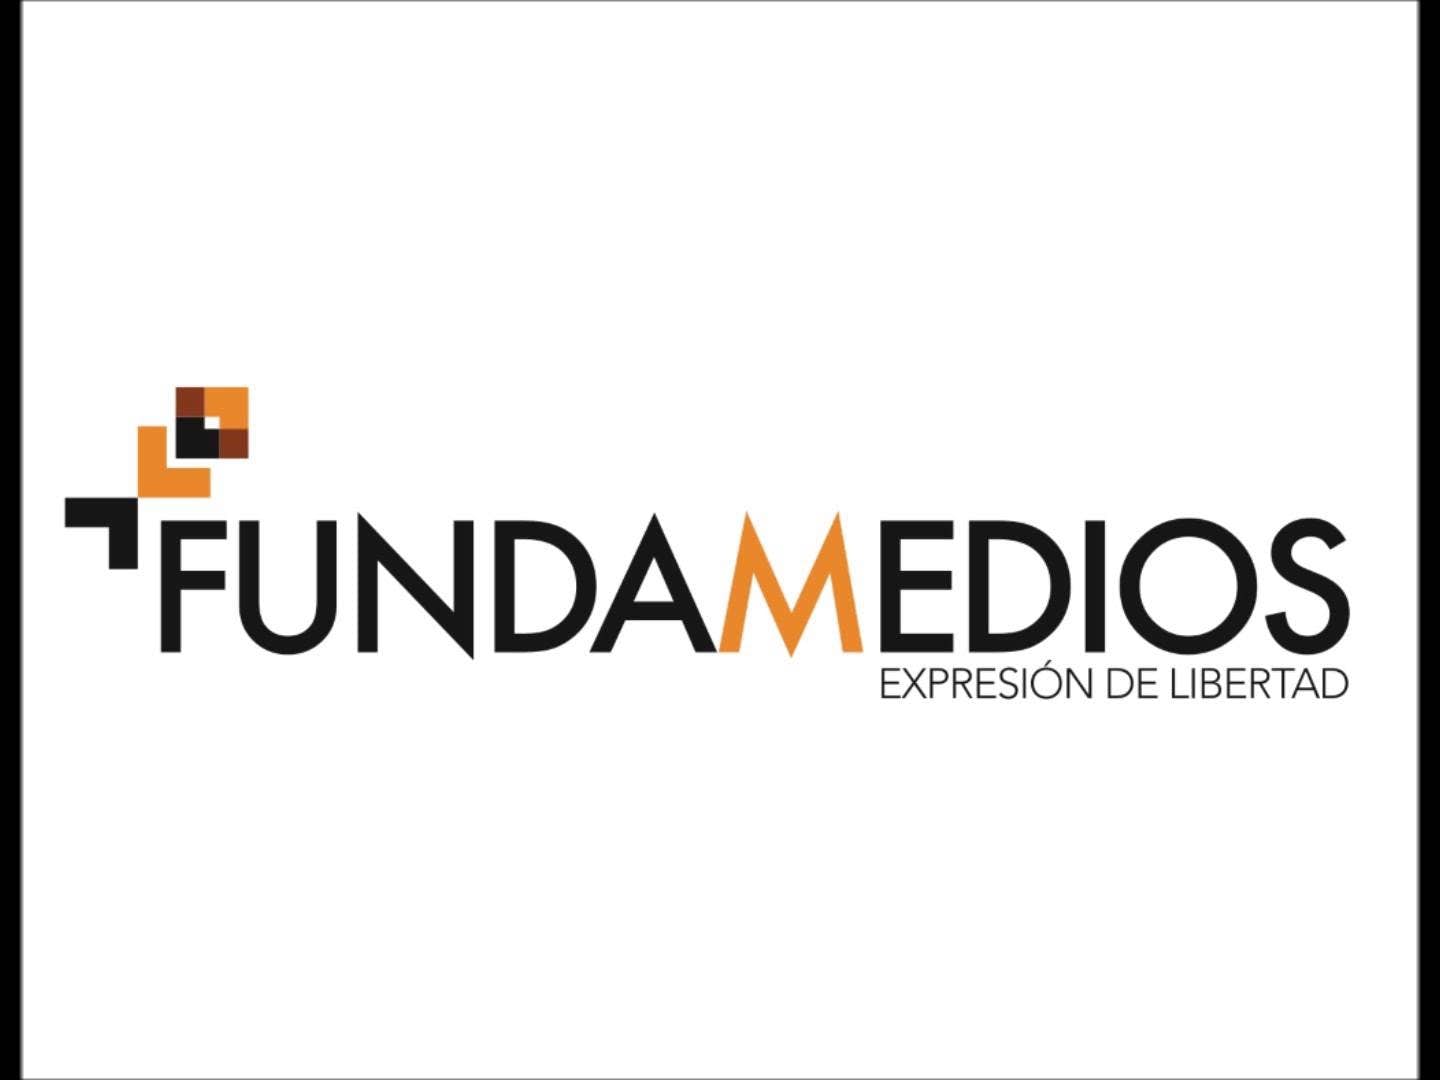 Press Release — Ecuador: HRF Welcomes Dismissal of Case Against Fundamedios